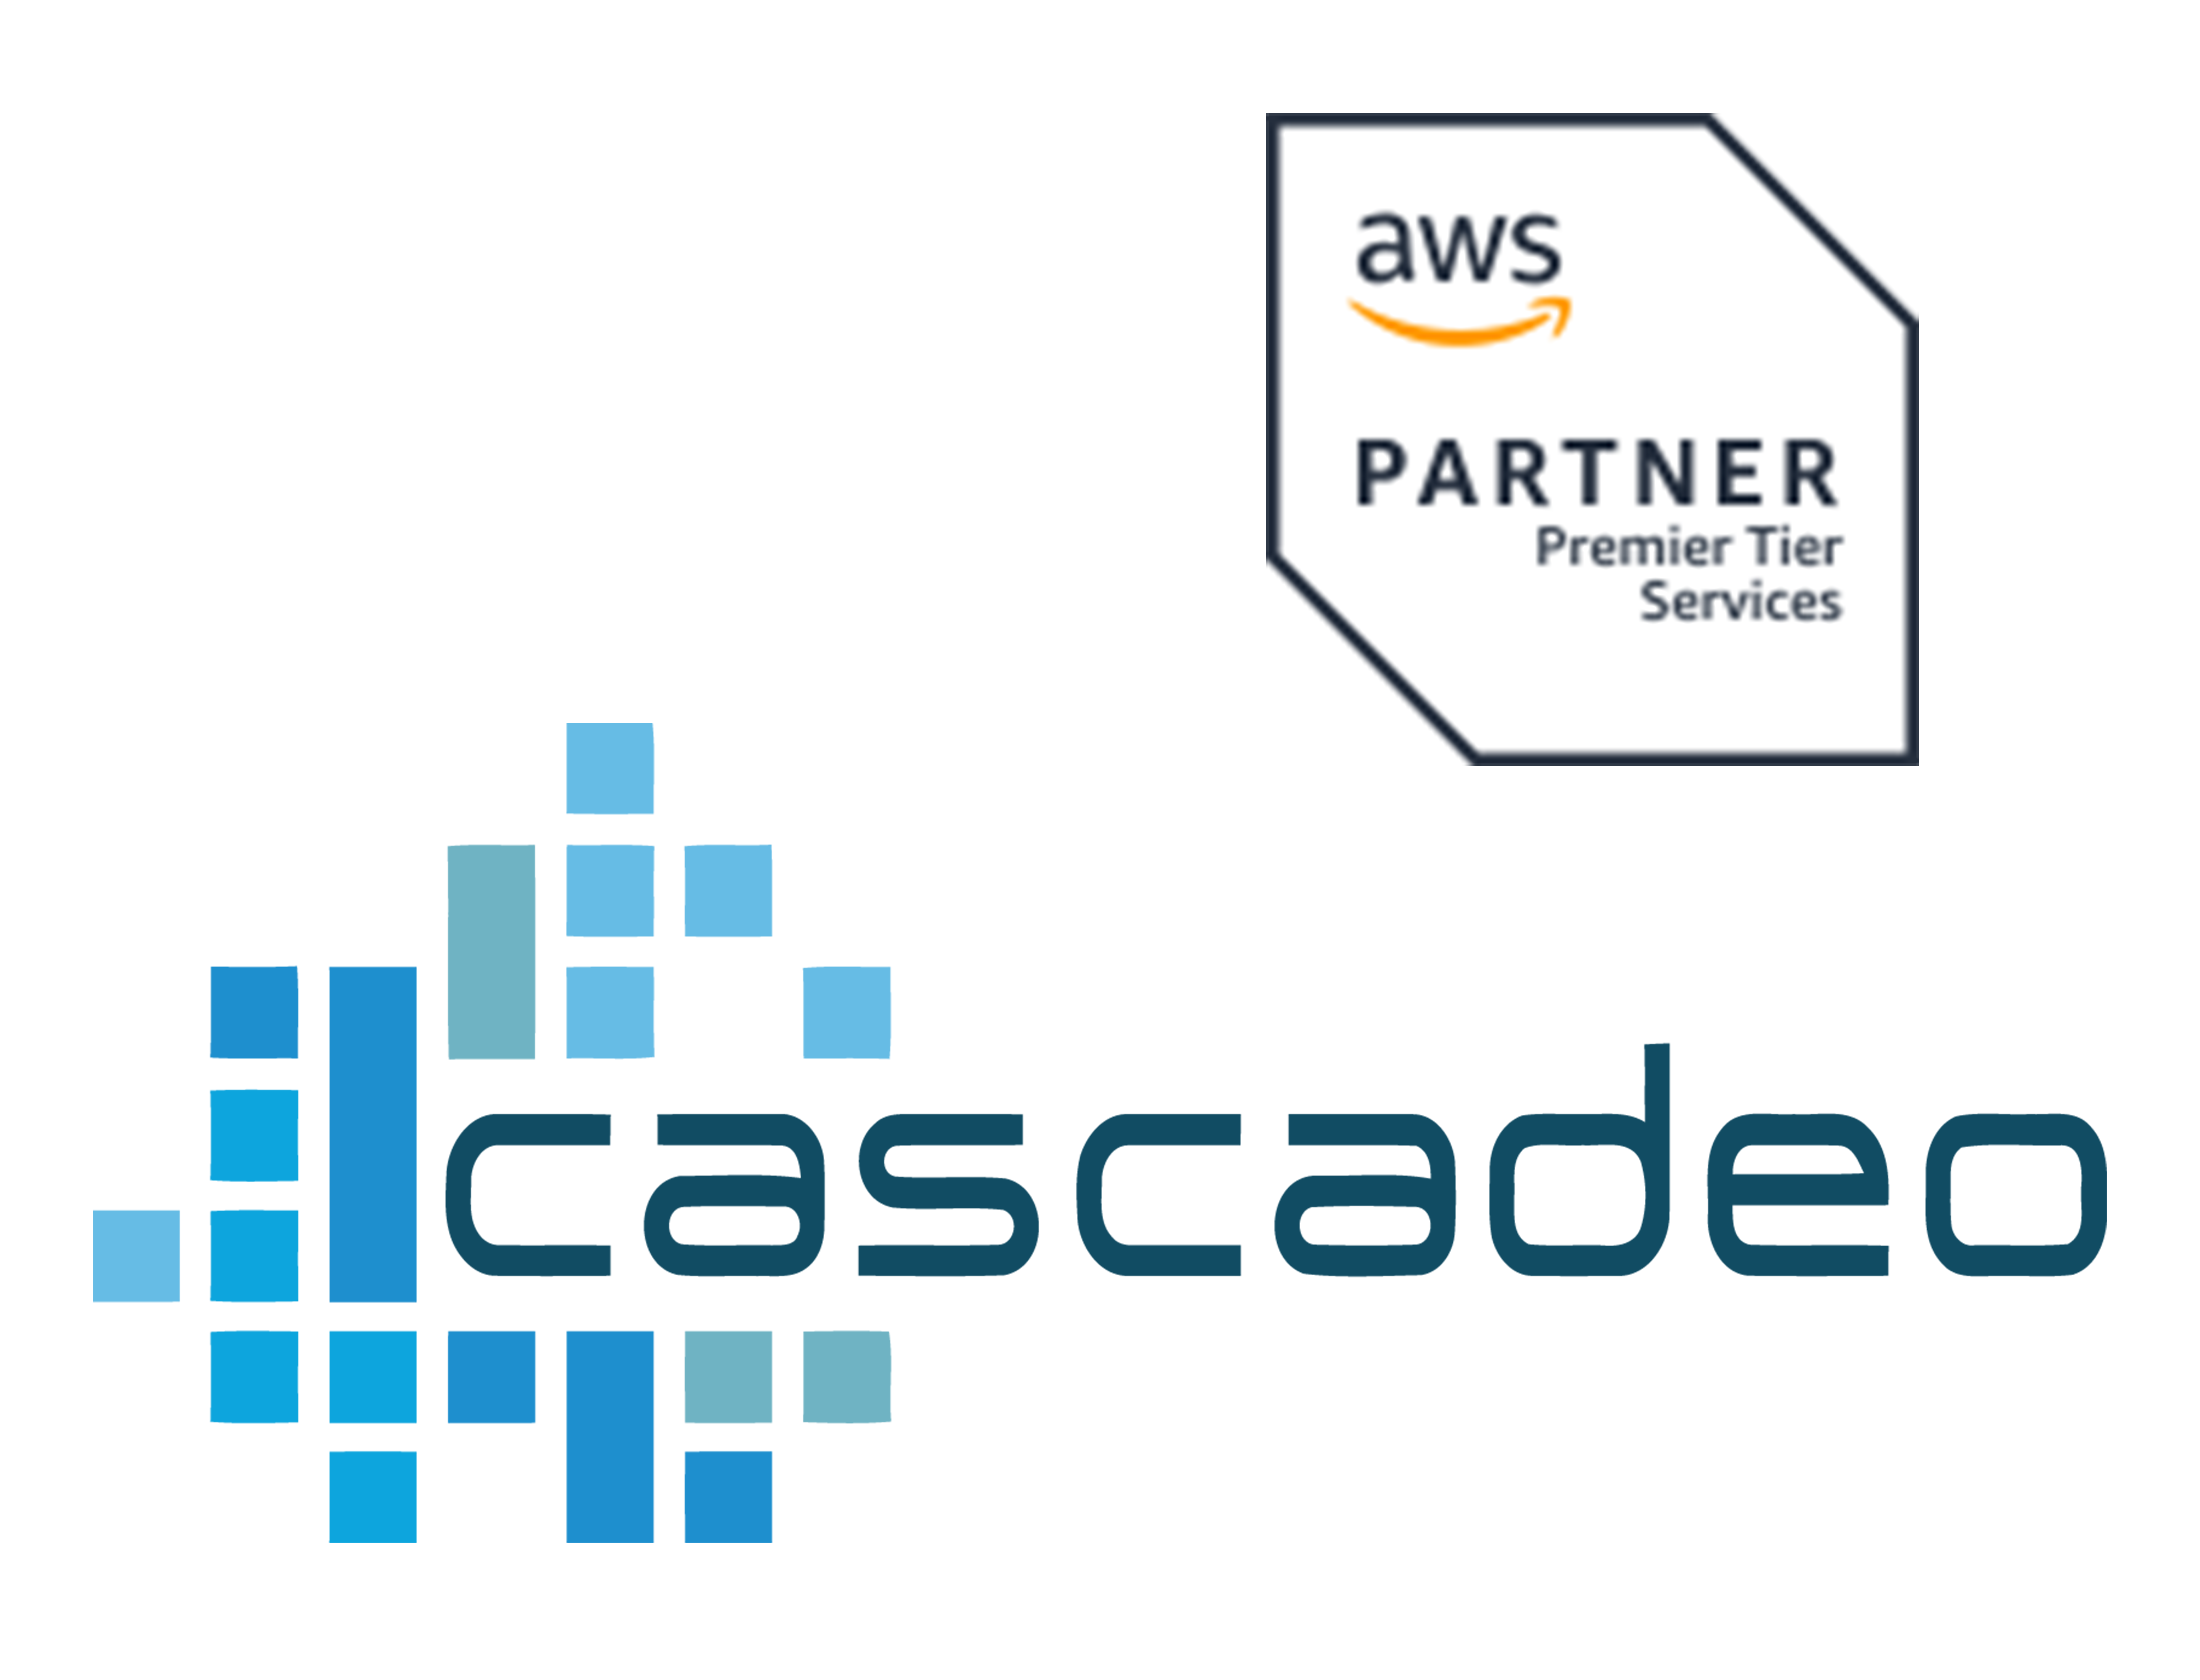 Cascadeo is a Premier Tier AWS partner